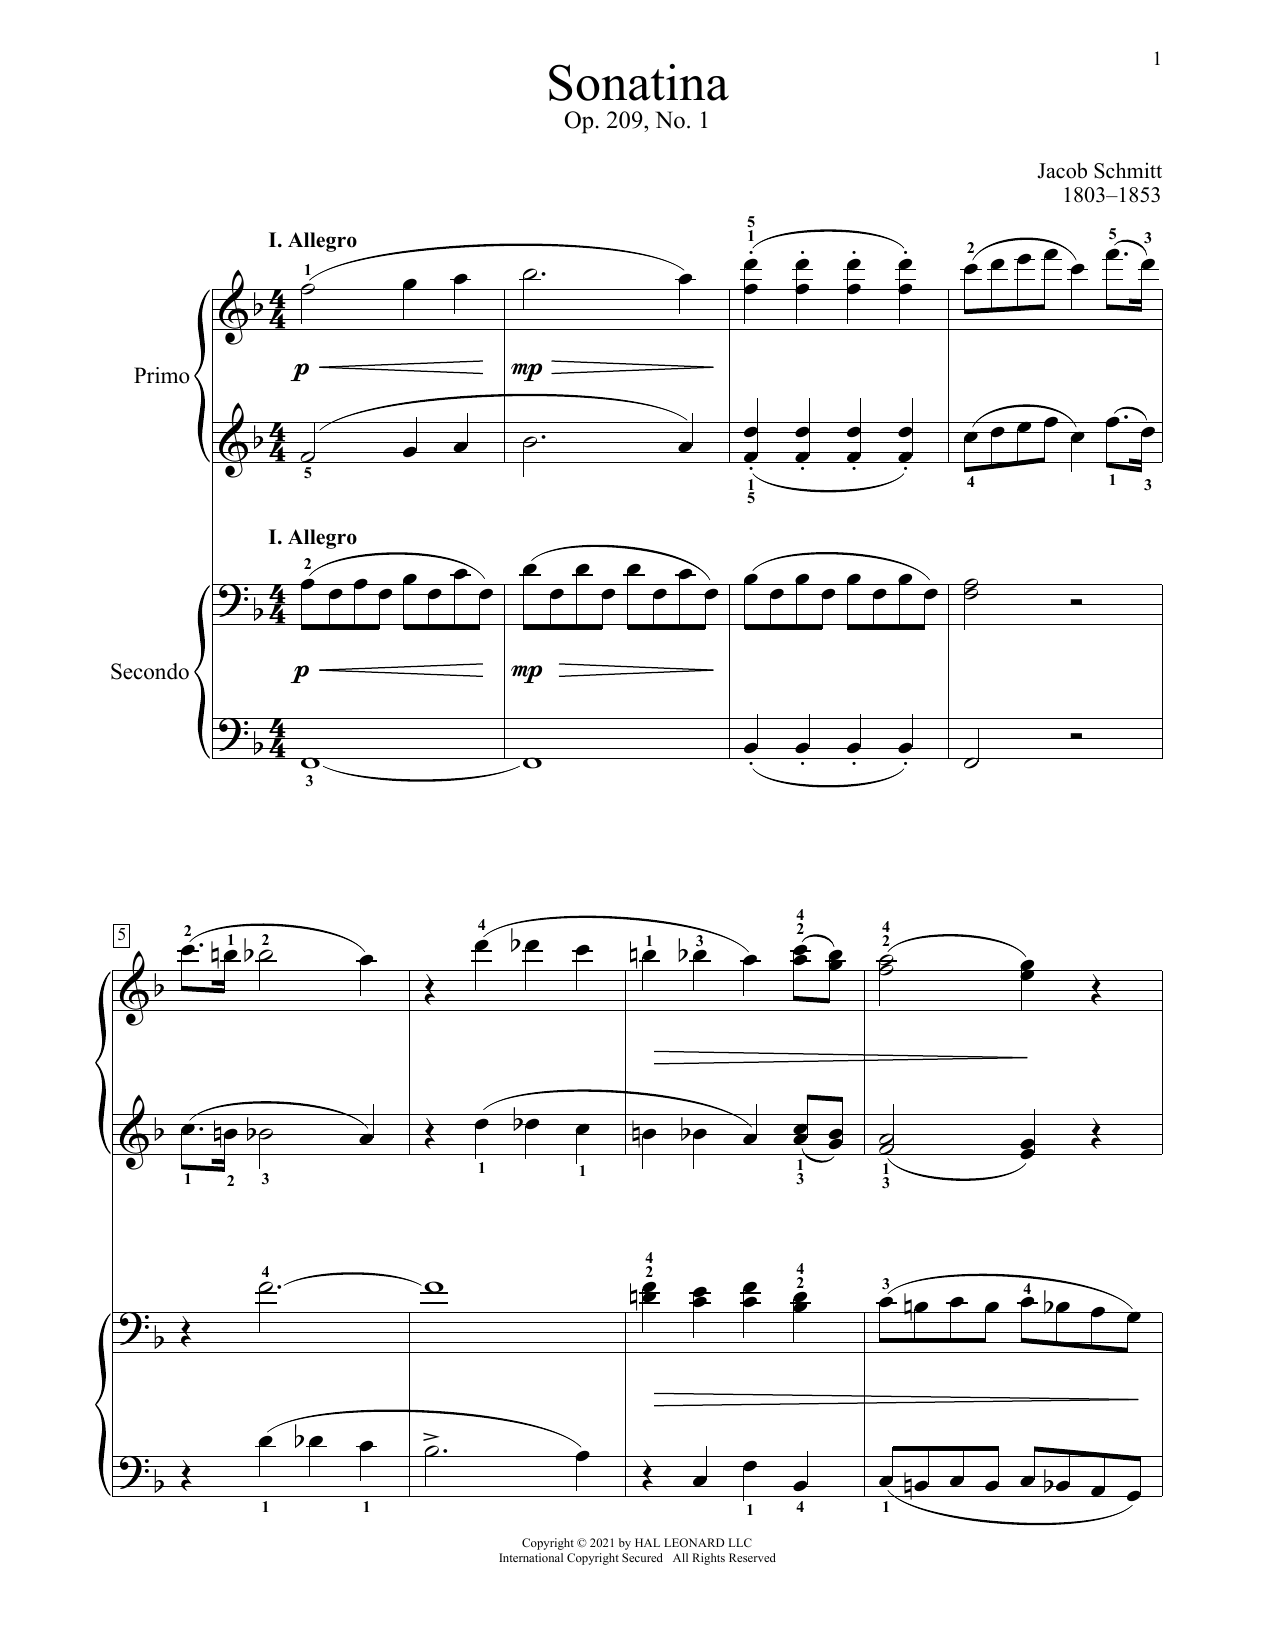 Jacob Schmitt Sonatina, Op. 209, No. 1, I. Allegro Sheet Music Notes & Chords for Piano Duet - Download or Print PDF